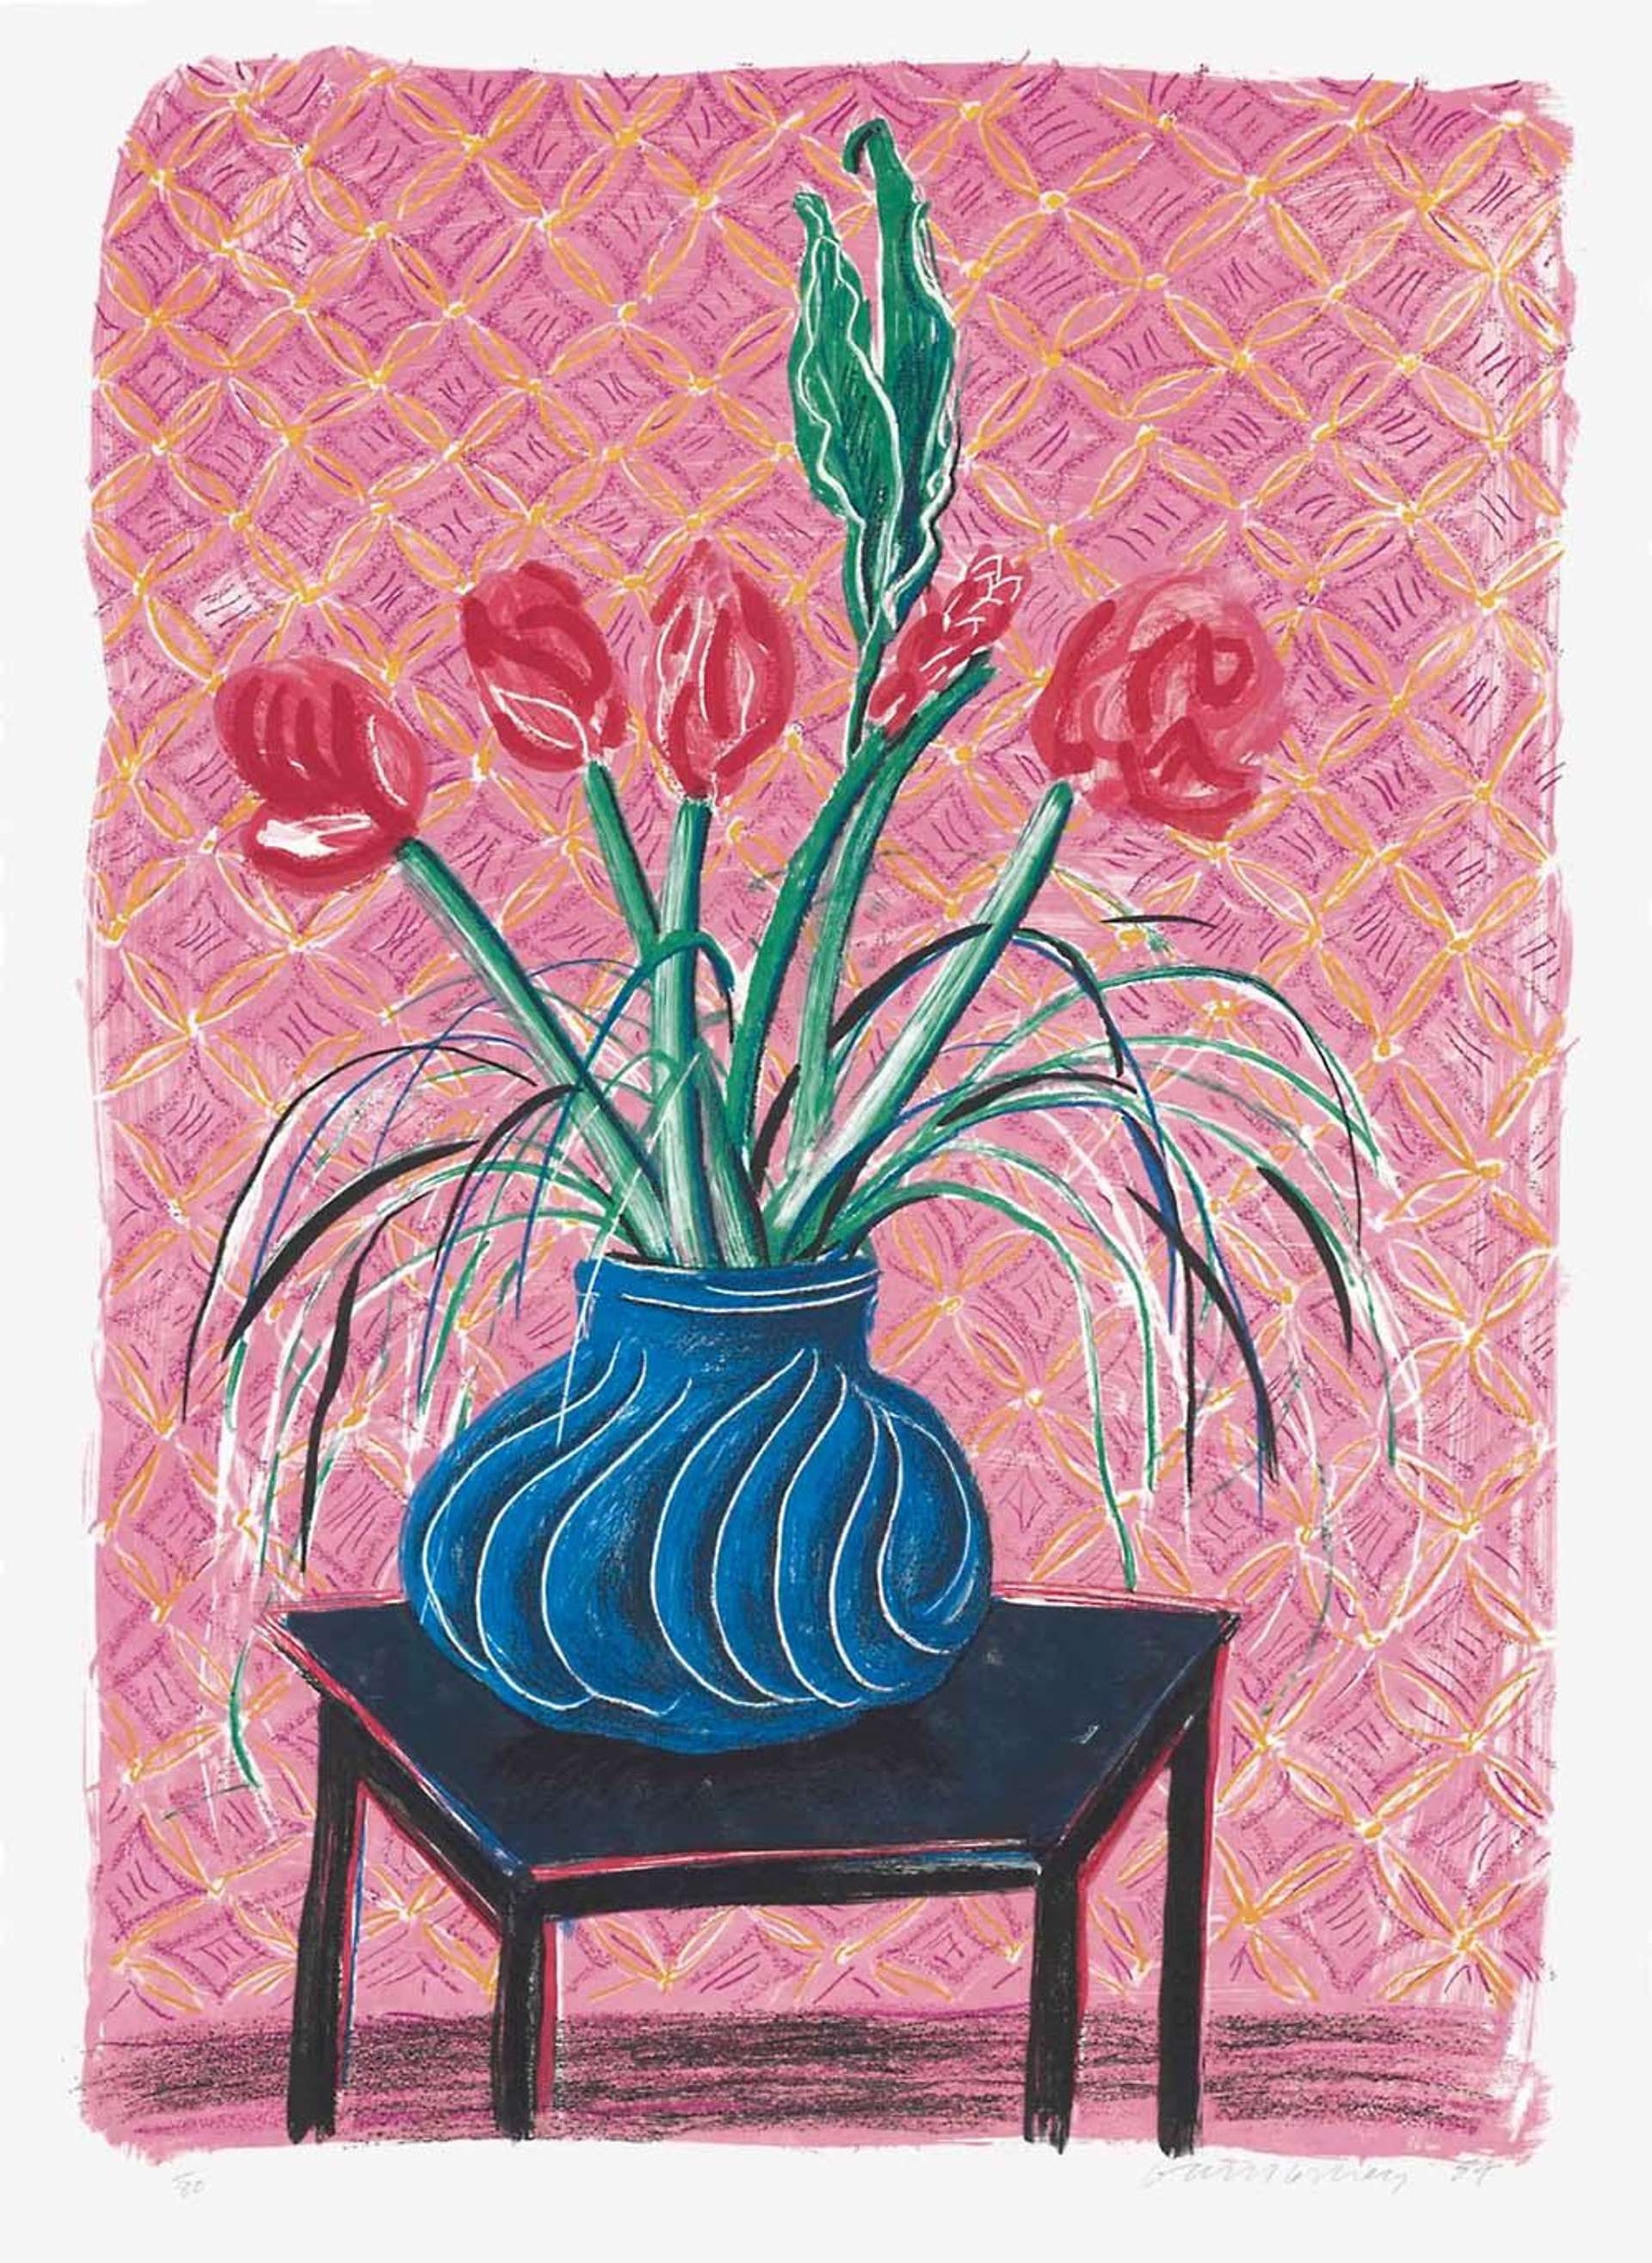 David Hockney: Amaryllis In Vase - Signed Print